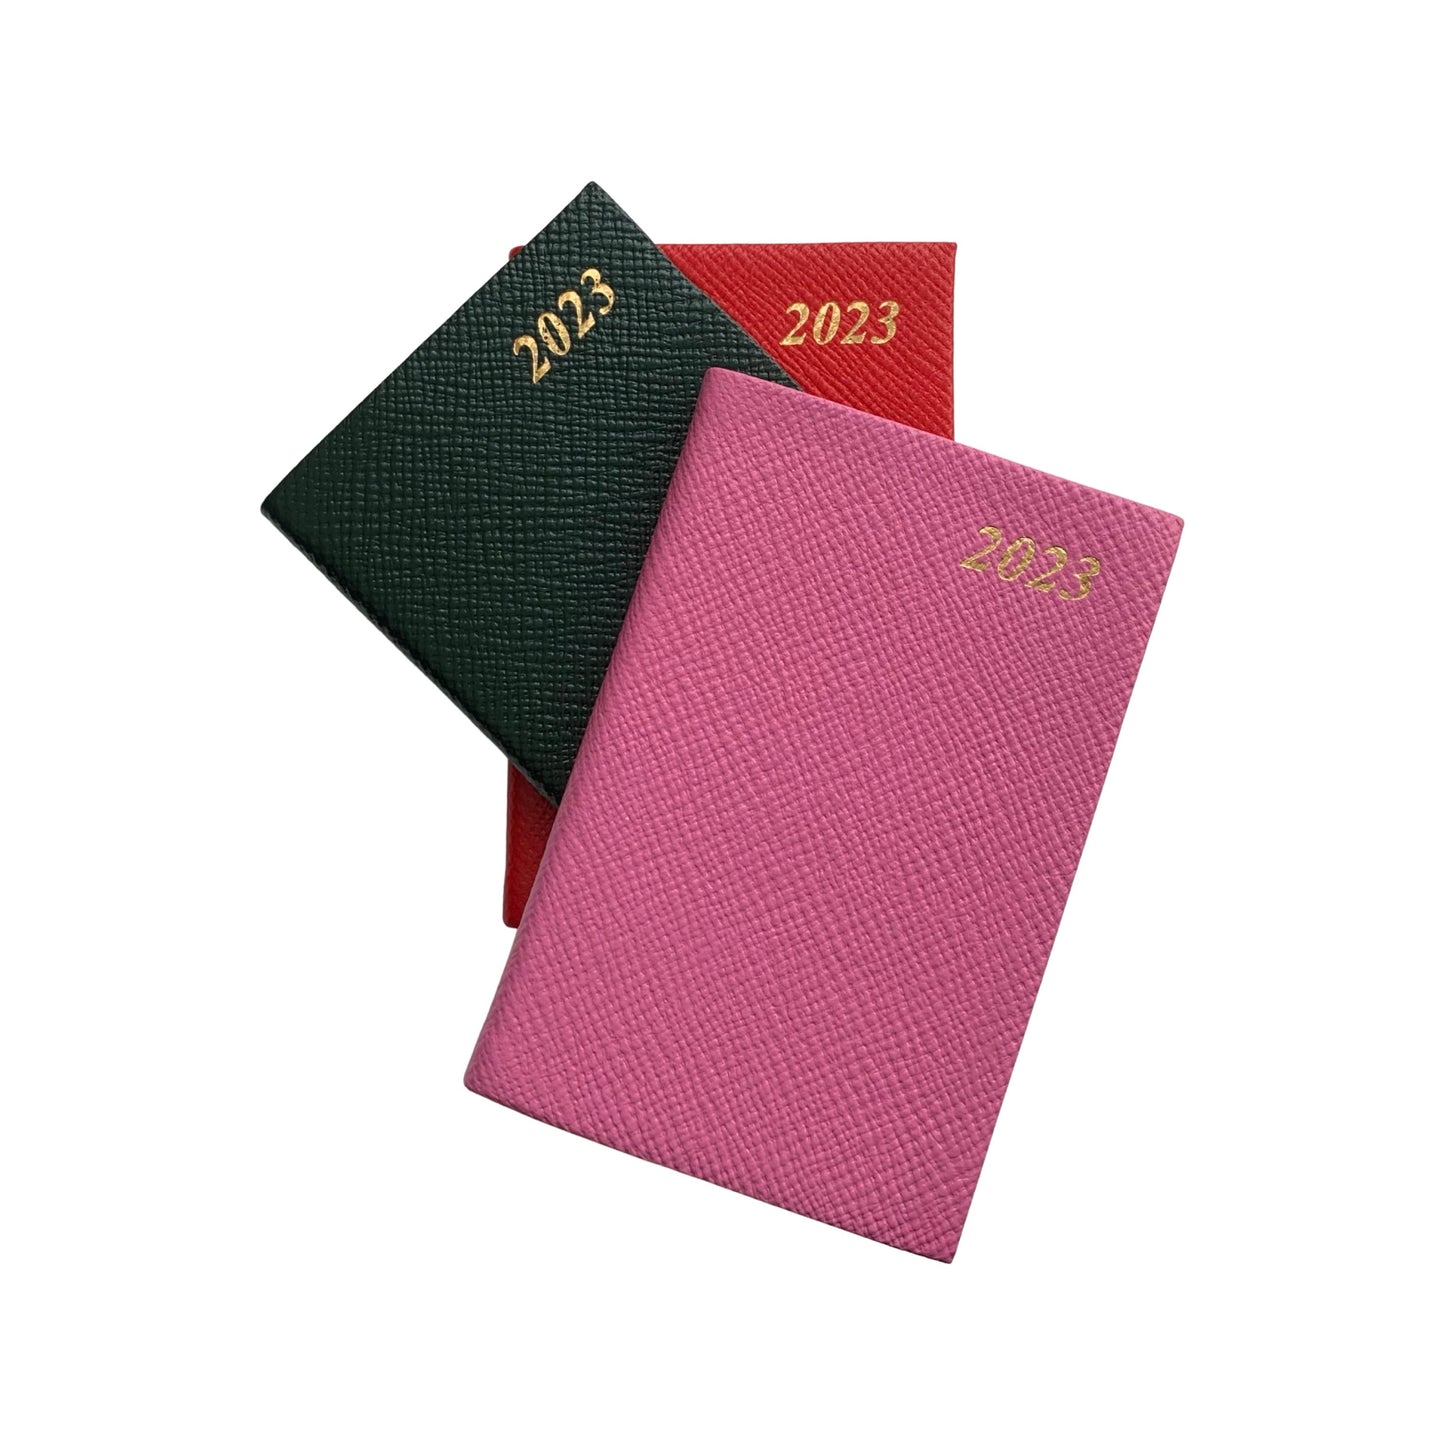 YEAR 2023 CROSSGRAIN Leather Pocket Calendar Book | 4 x 2.5" | D742L